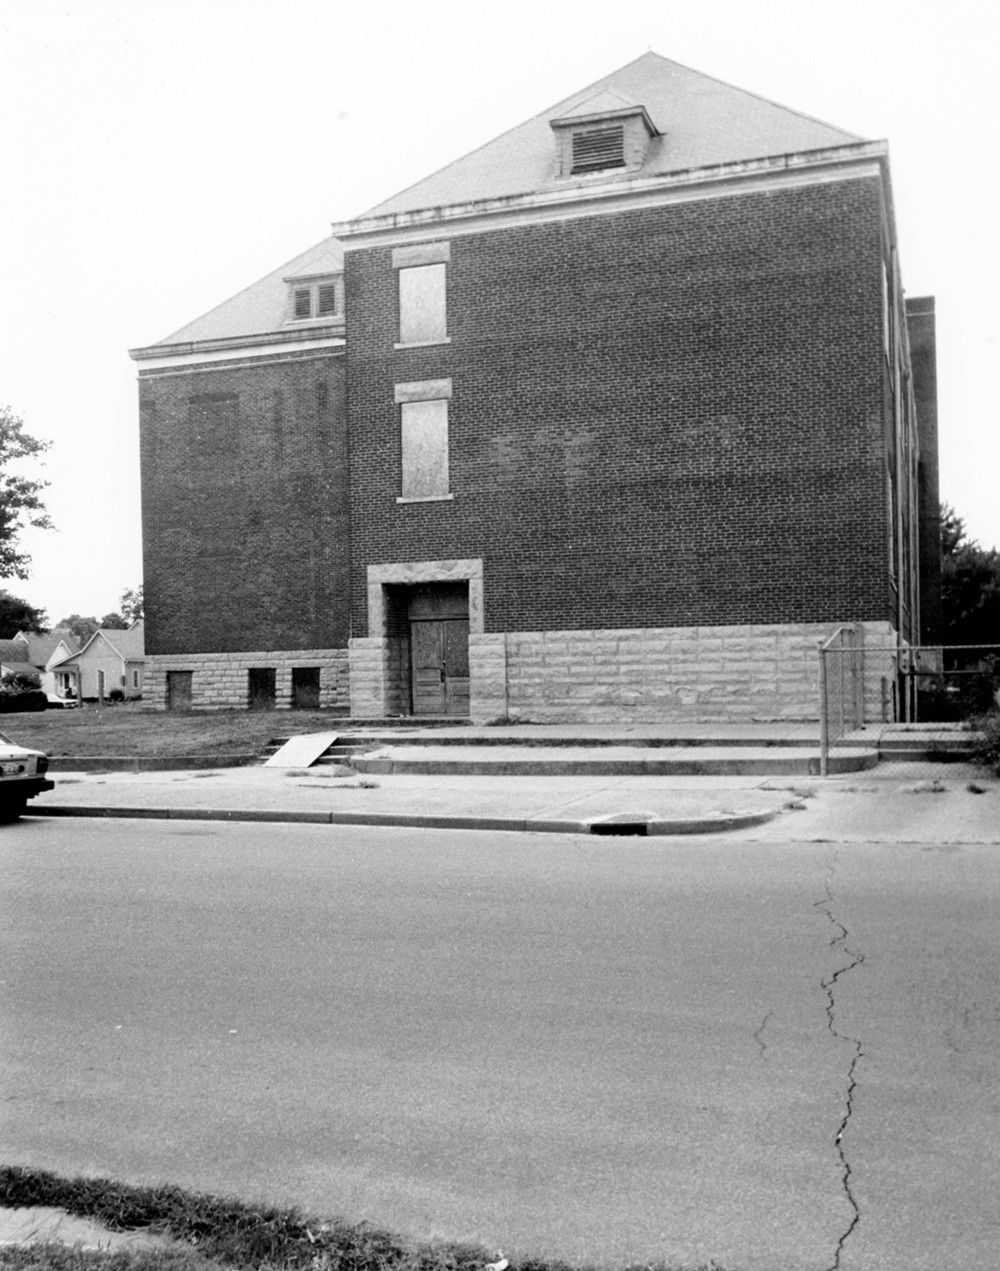 McKinley School - North Side School, Columbus Indiana Looking West (1987)